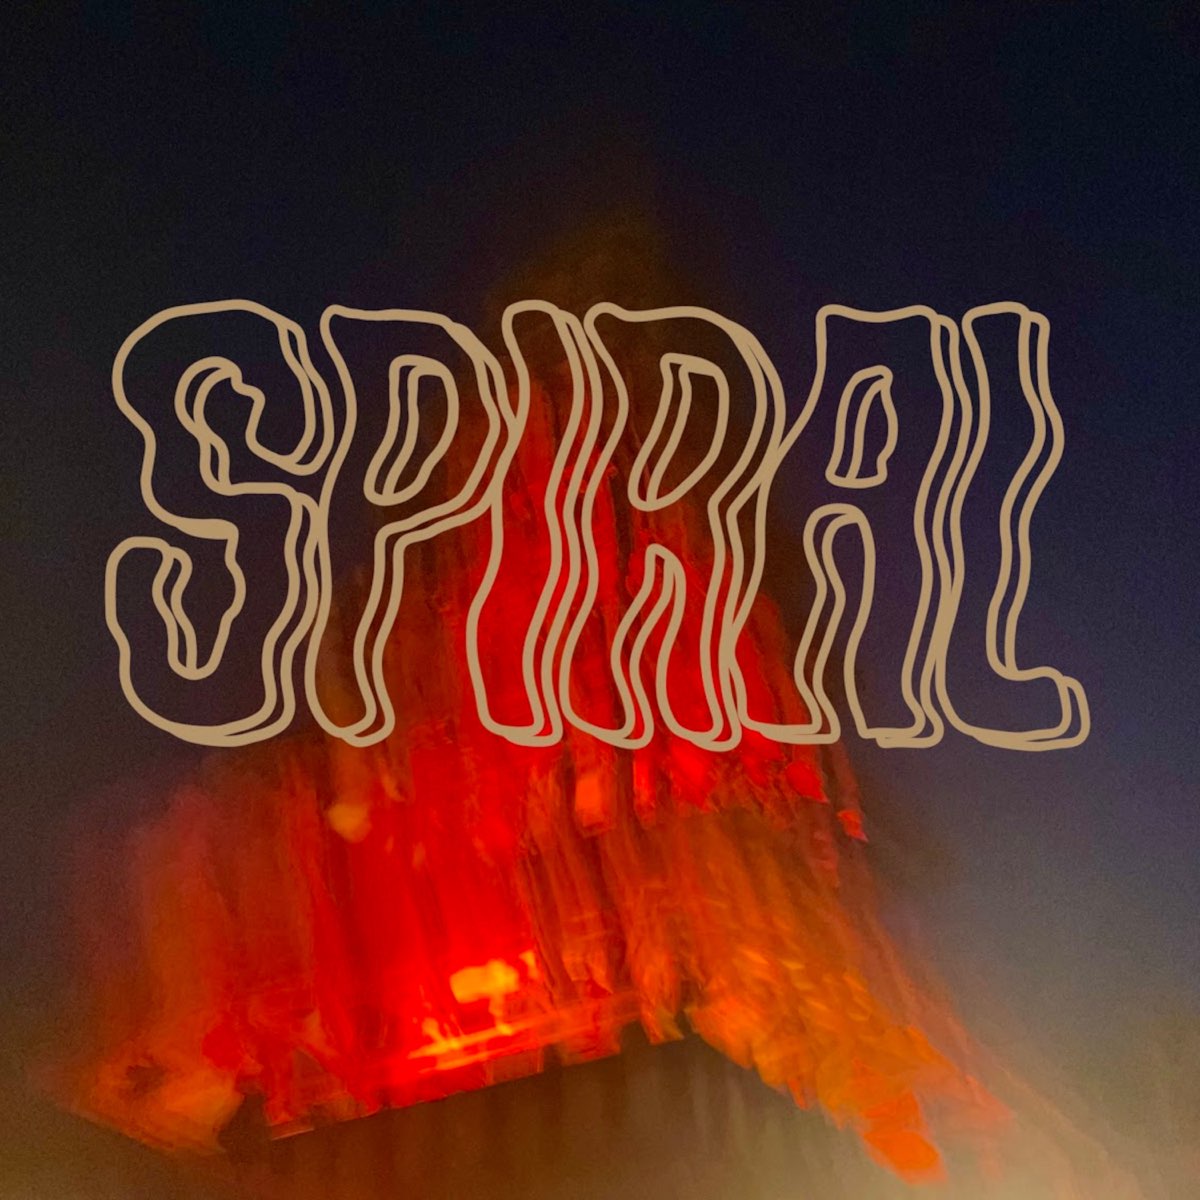 Cathedral Bells — Spiral cover artwork